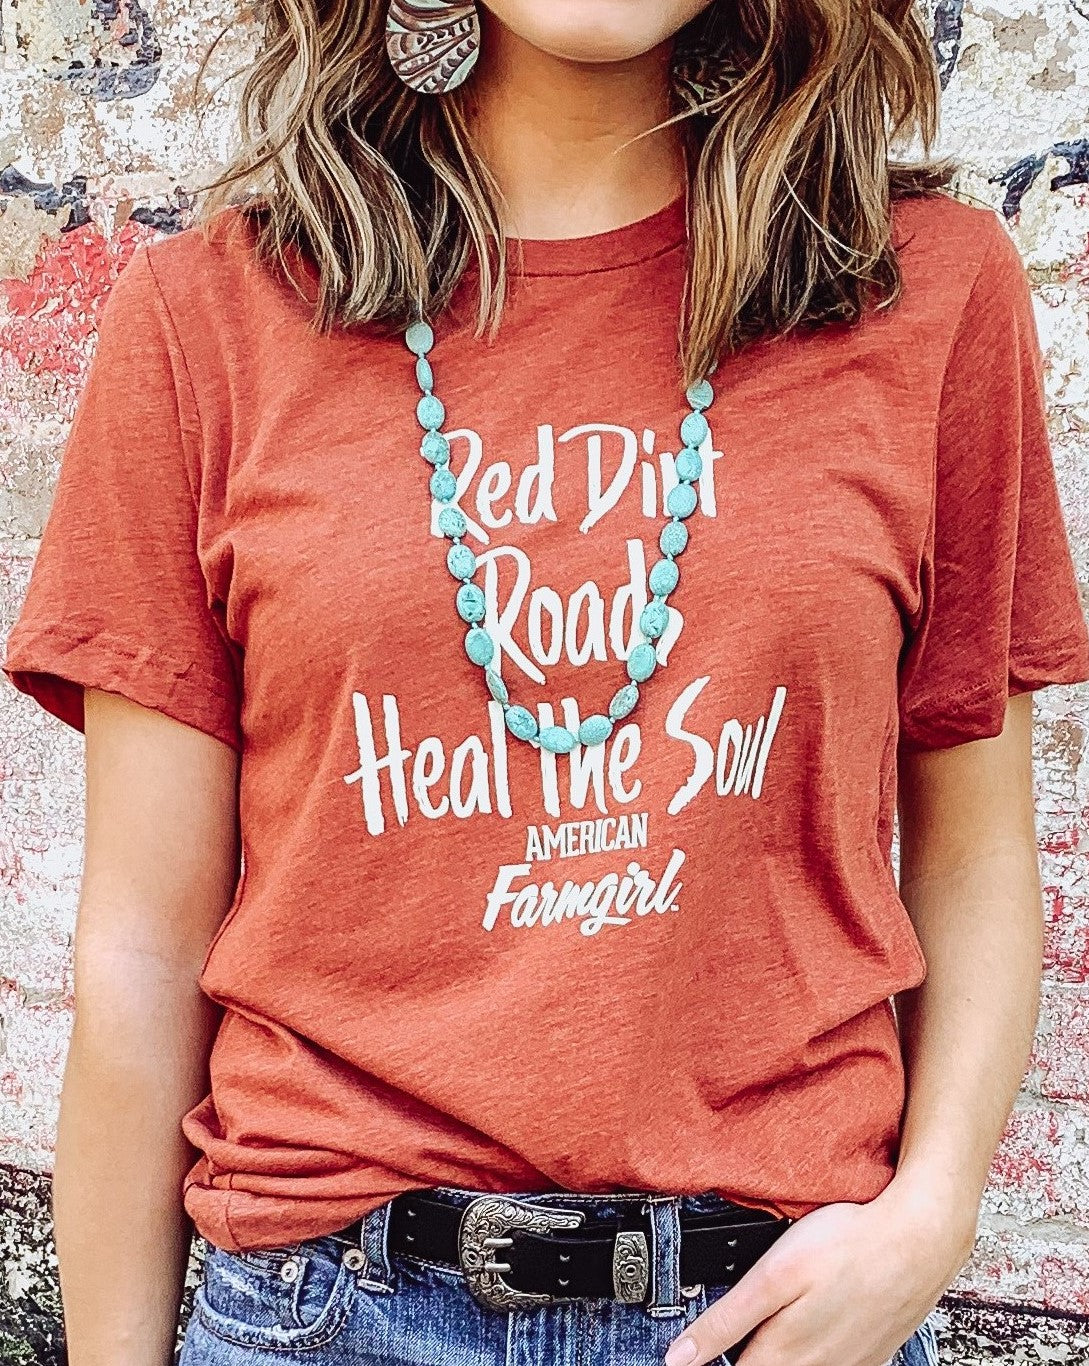 Red Dirt Roads Heal the Soul crewneck tee in brick by American Farmgirl